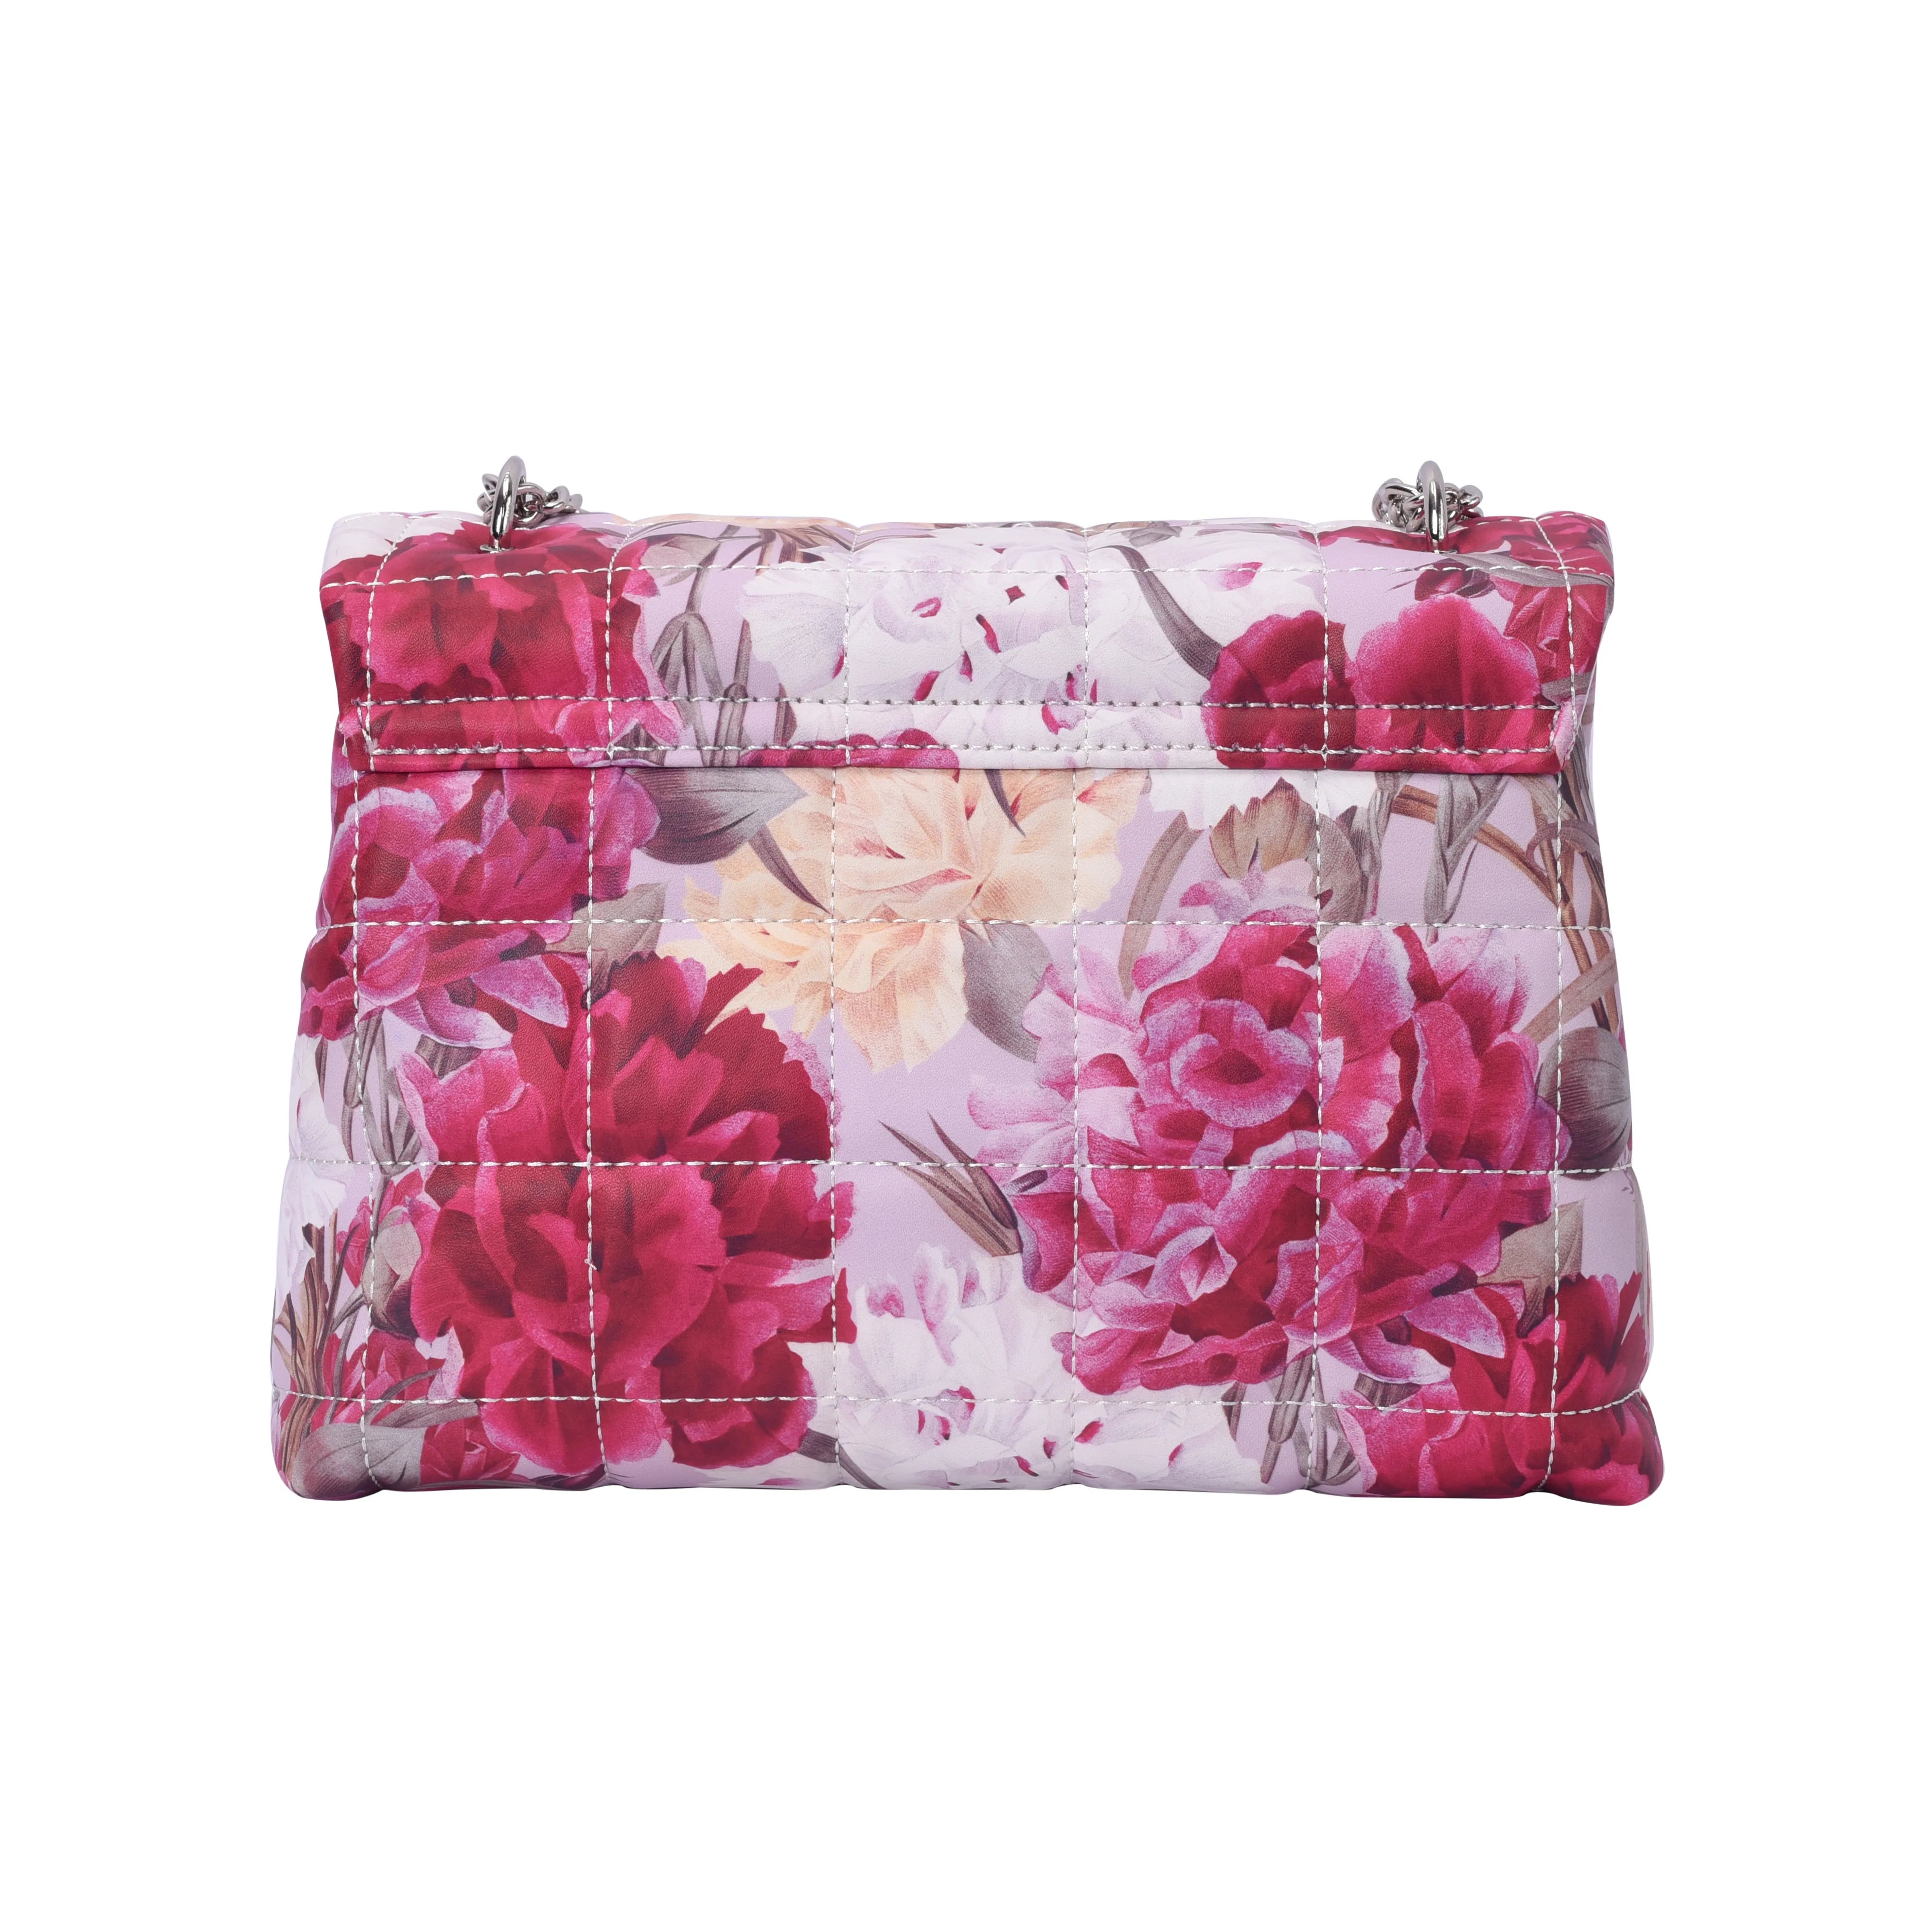 Pink floral Kate spade purse | Kate spade purse, Kate spade, Pink floral